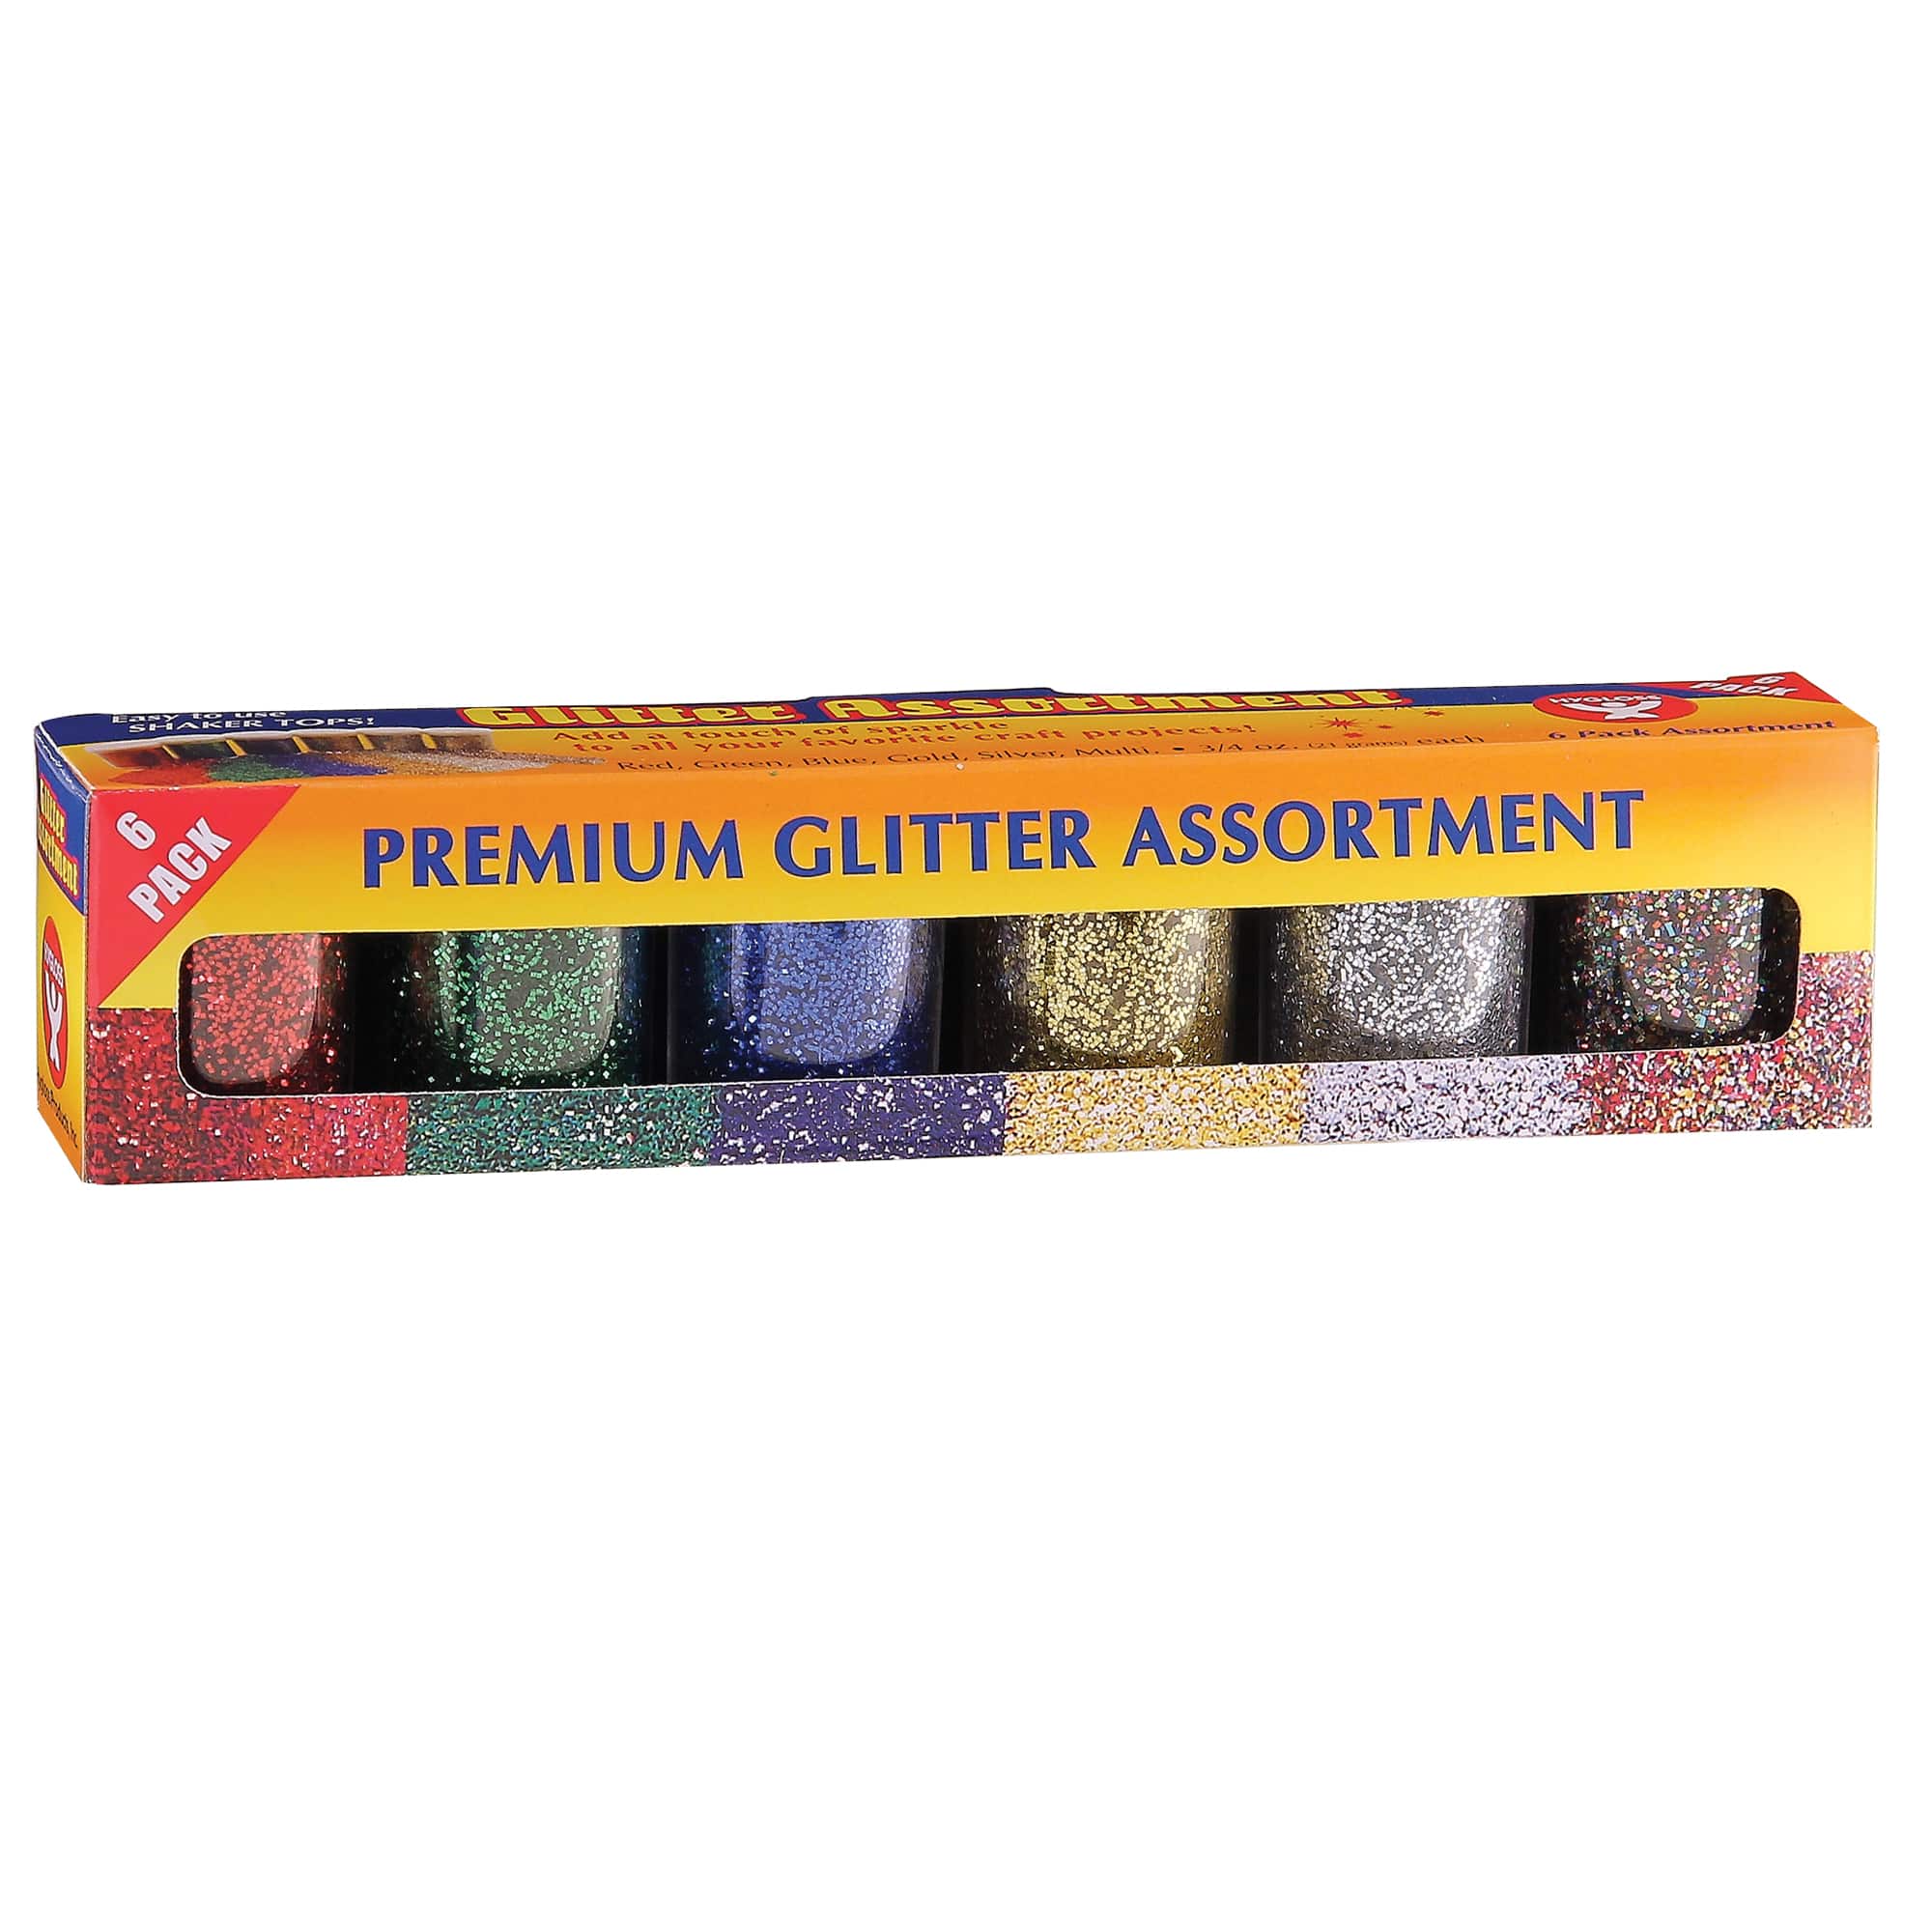 Hygloss Glitter Assortment, 6 Colors Per Pack, 3 Packs